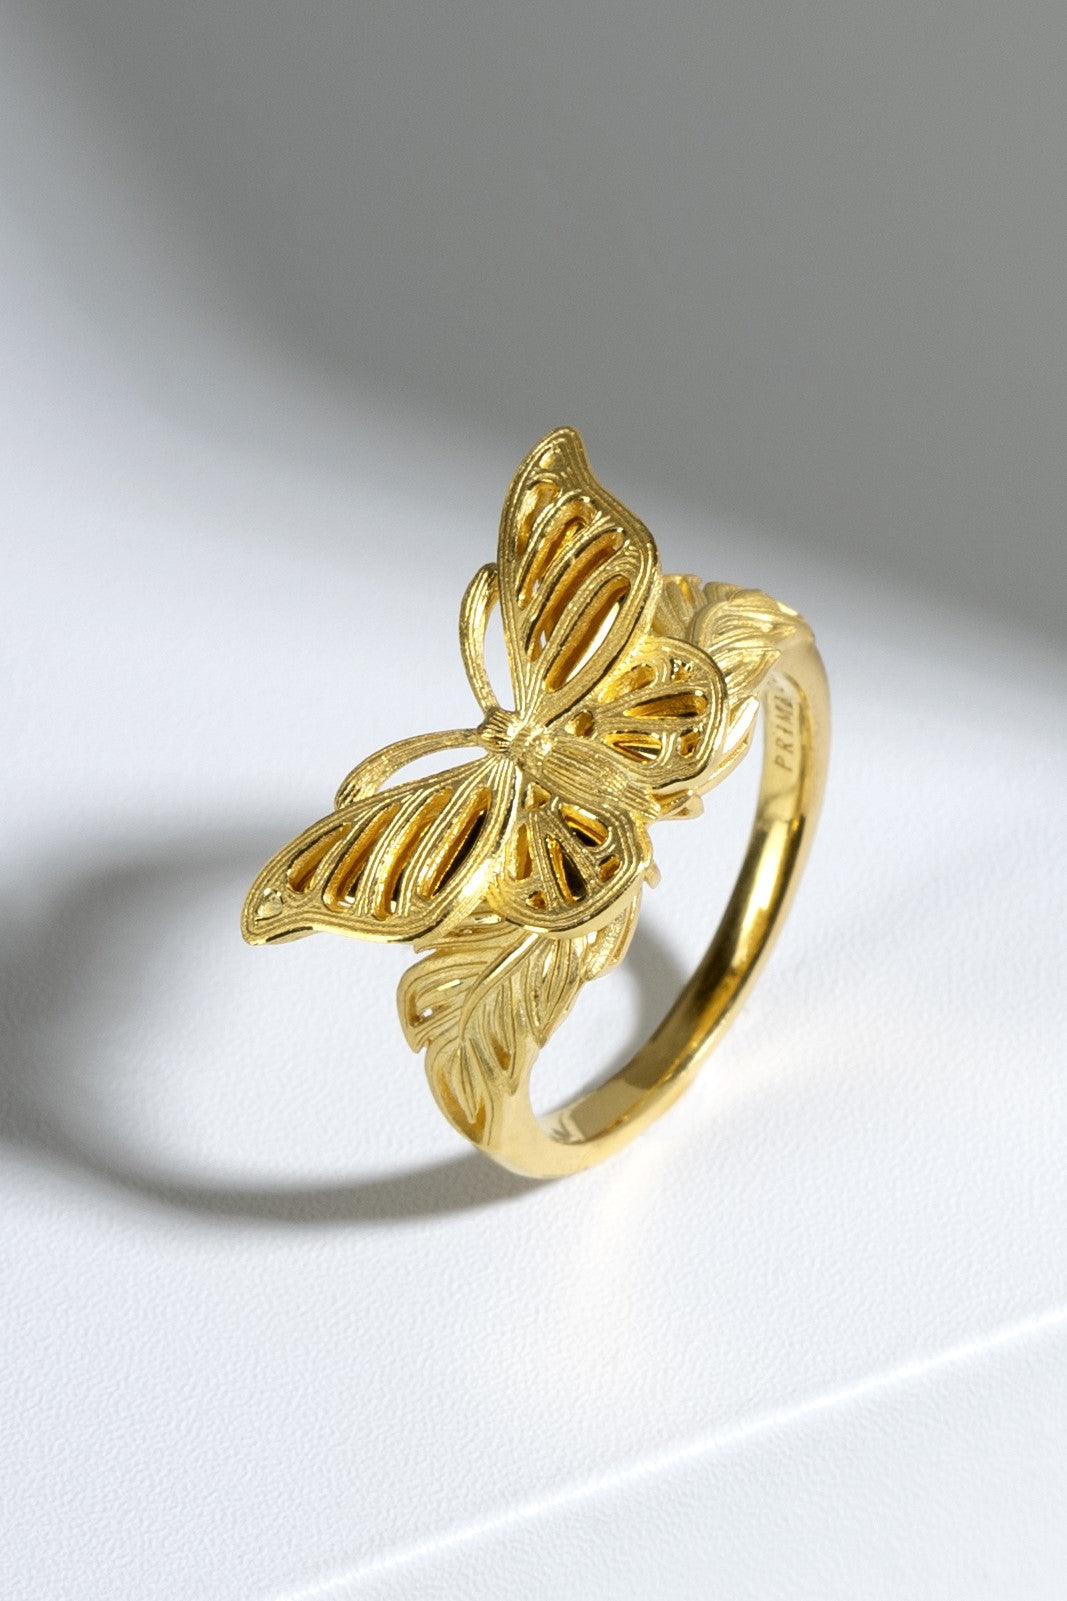 24k Gold Ring Engagement Rings | 24k Gold Wedding Ring Original - 24k Pure  Gold Color - Aliexpress